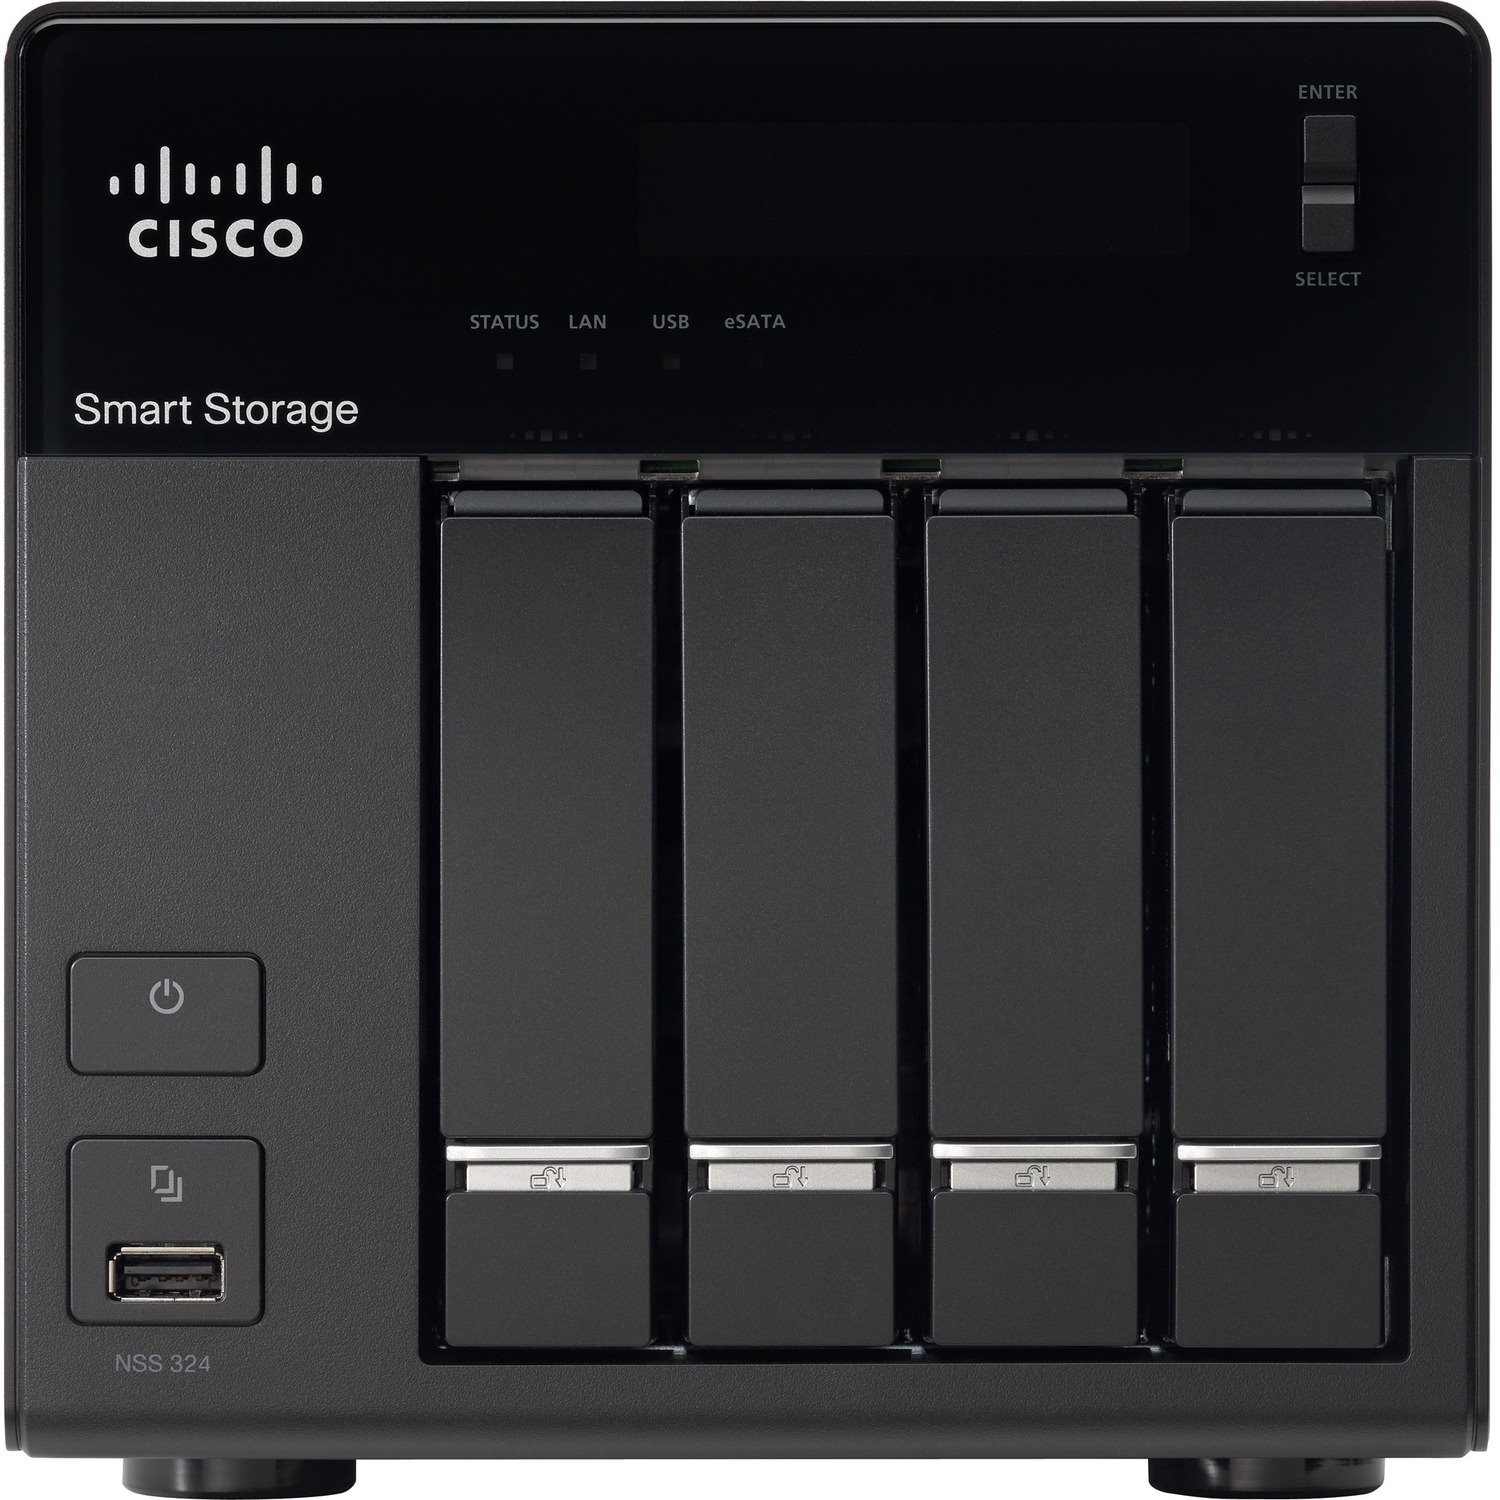 Cisco 4 Bay Desktop Gigabit Network Storage System with 1TB RAID